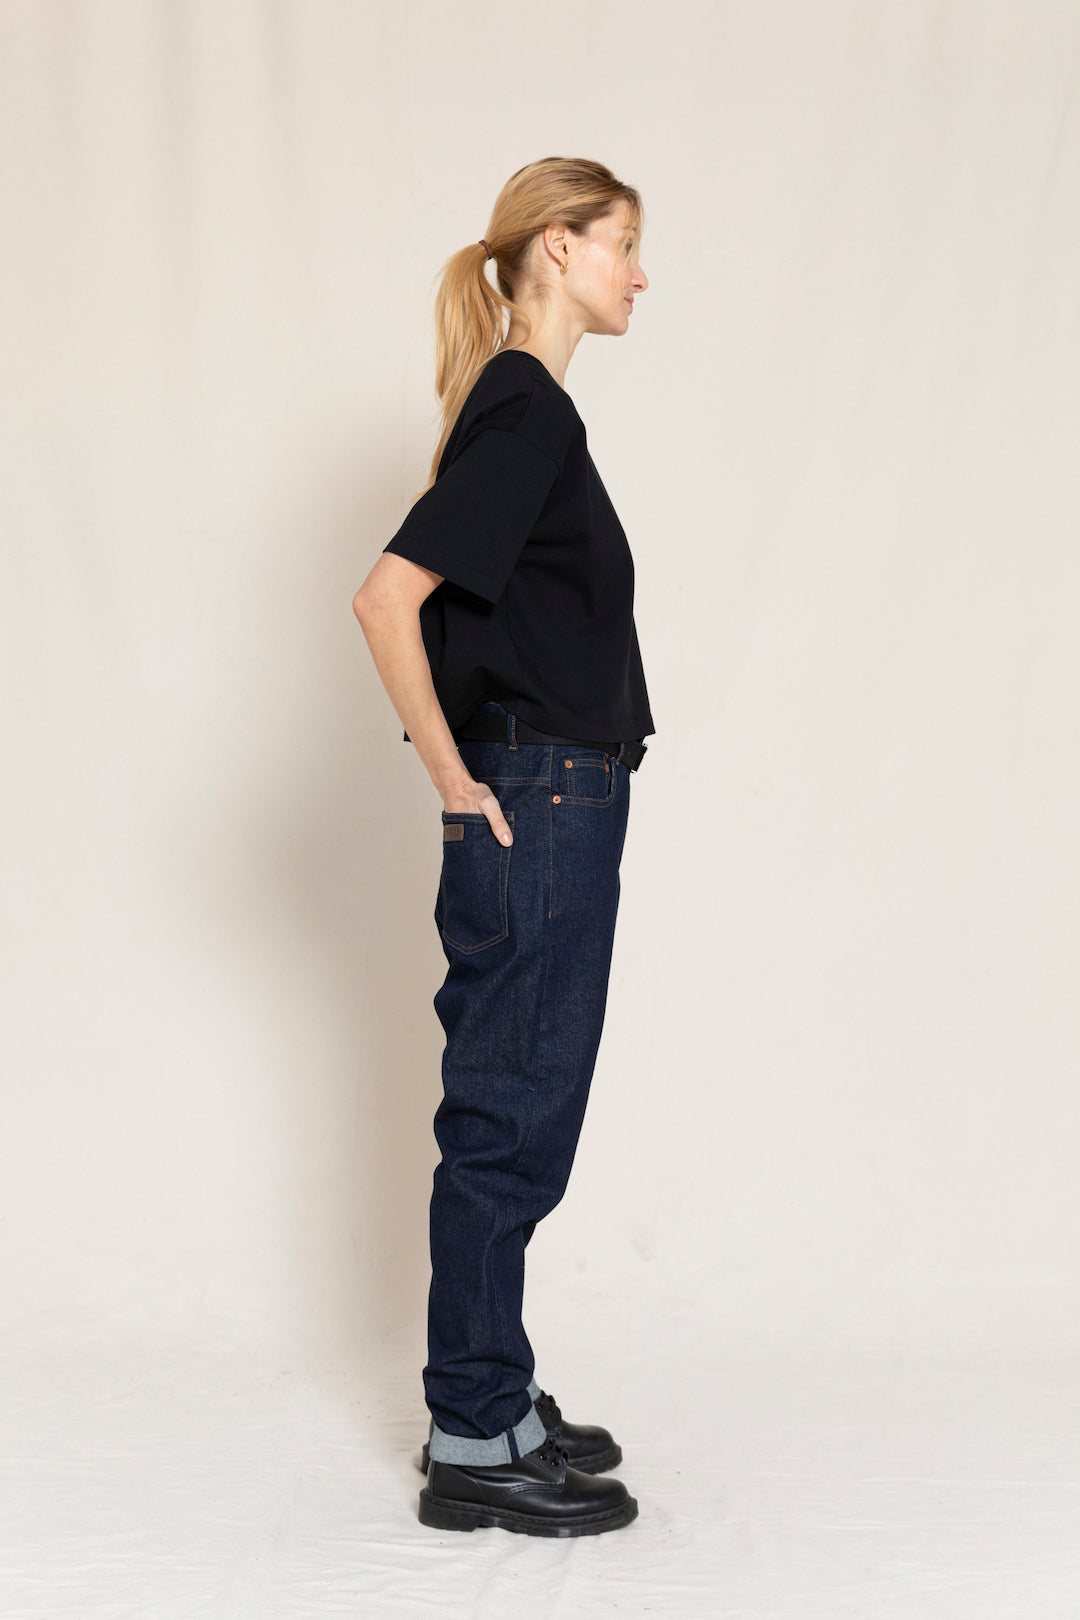 OLLIBIS Raw Denim Blue - 5-Pocket Tapered Fit Jeans